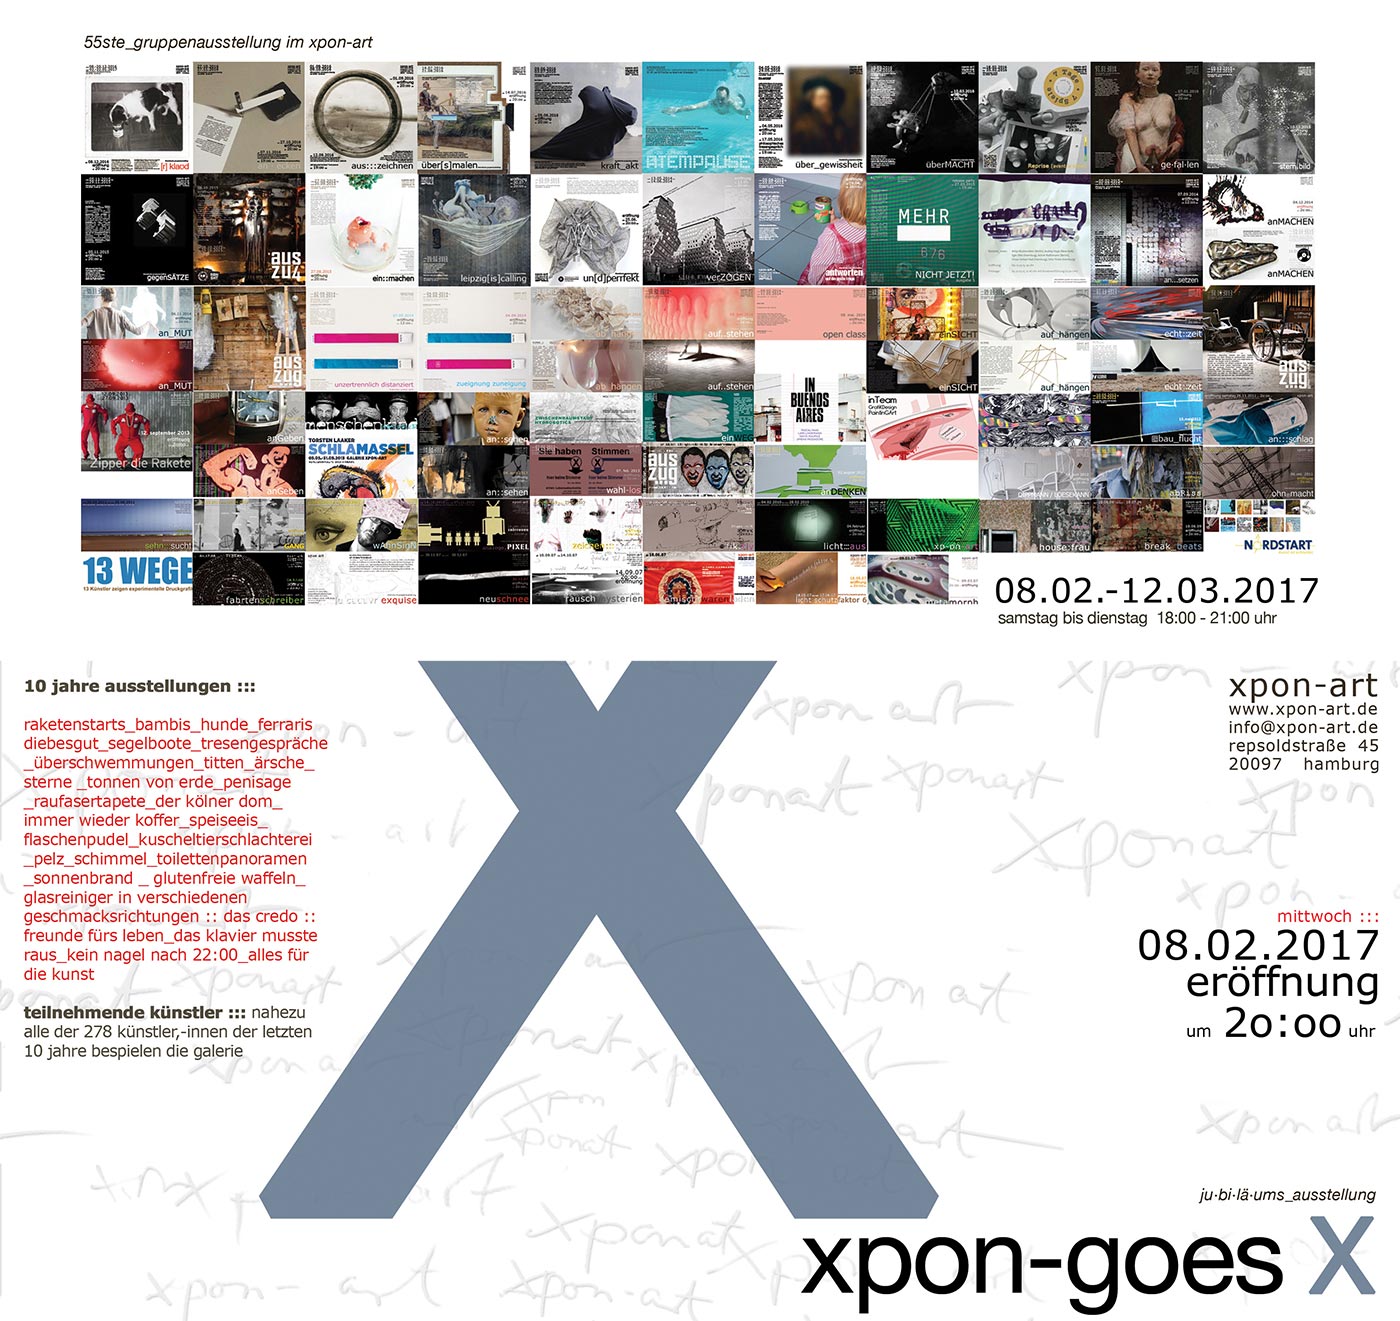 opening “xpon goes x” at 08.02.2017